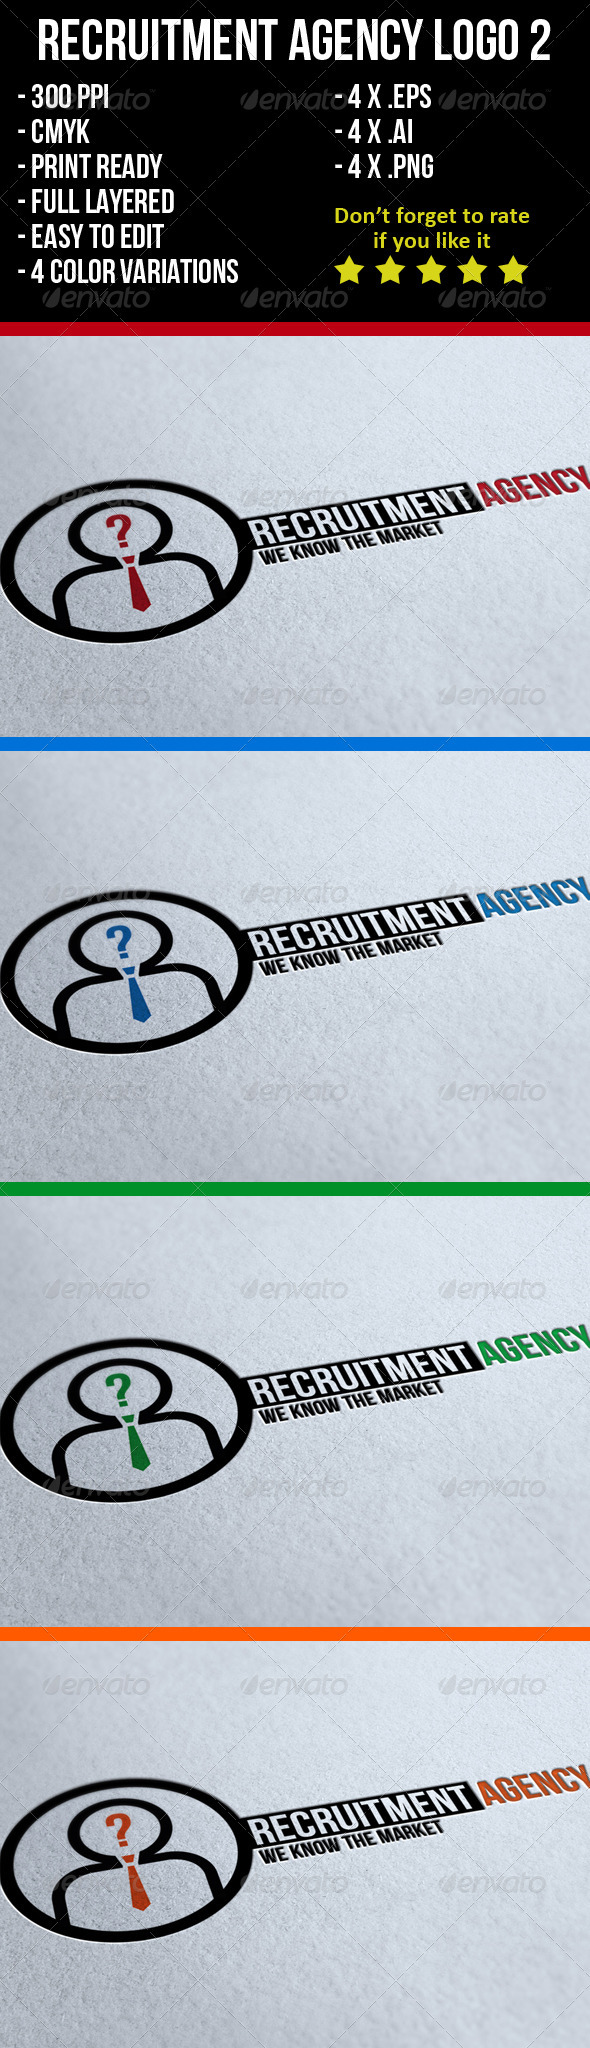 Recruitment Agency Logo 2